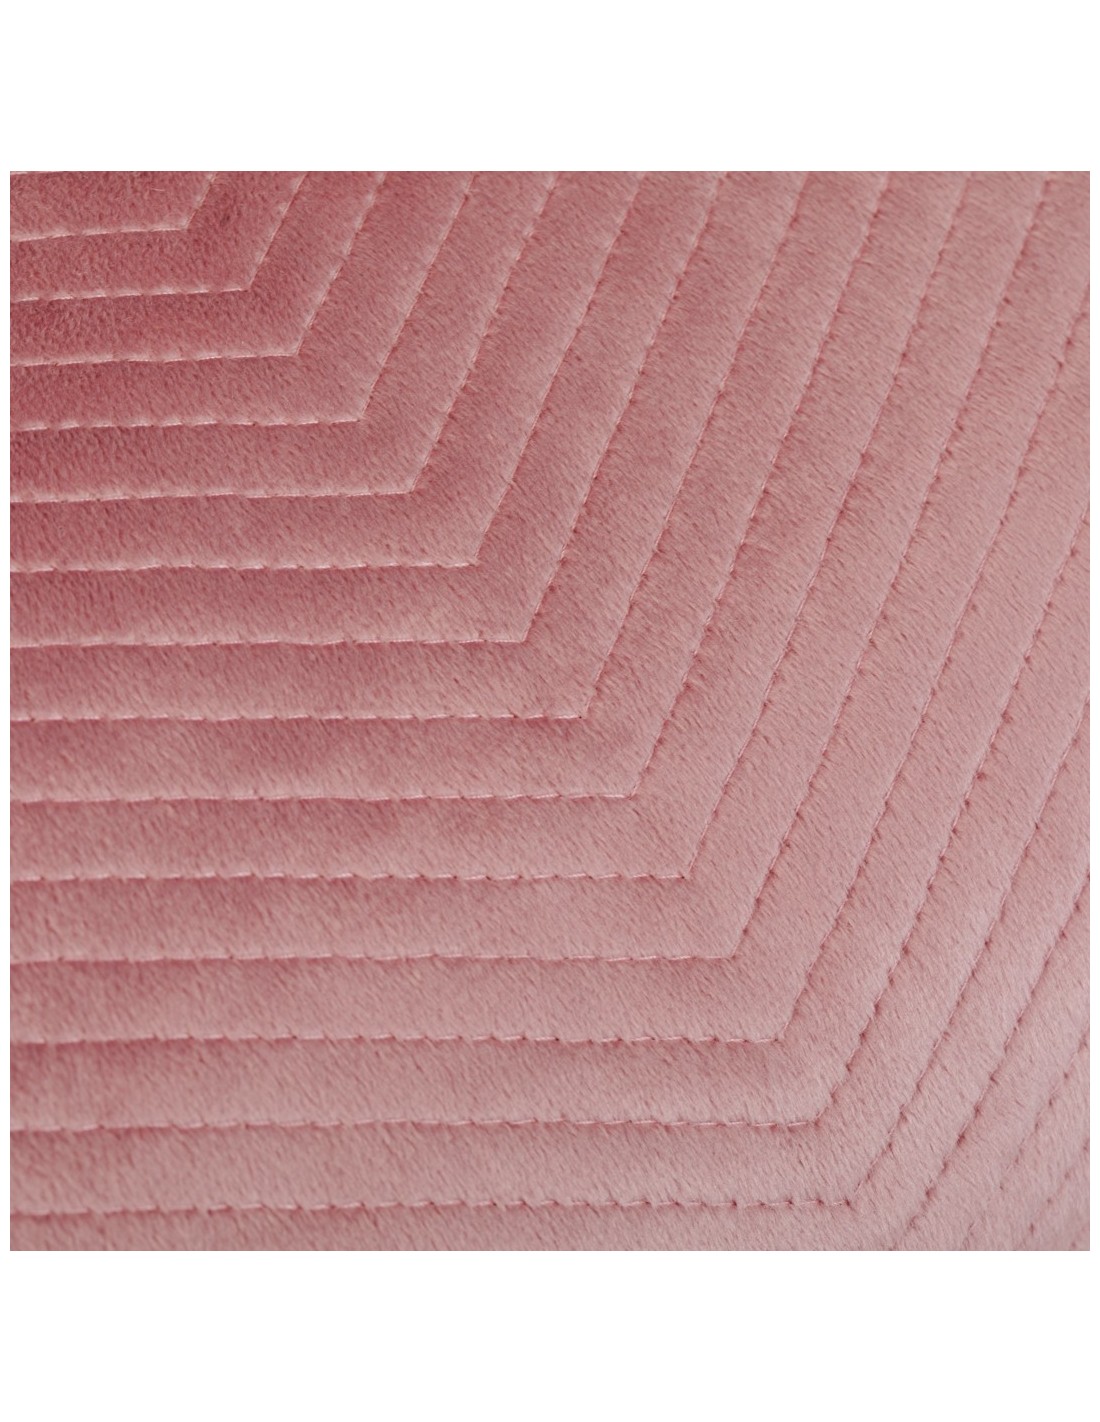 Cuscino quadrato New Hungria rosa chiaro 50x50 - federa+imbottitura